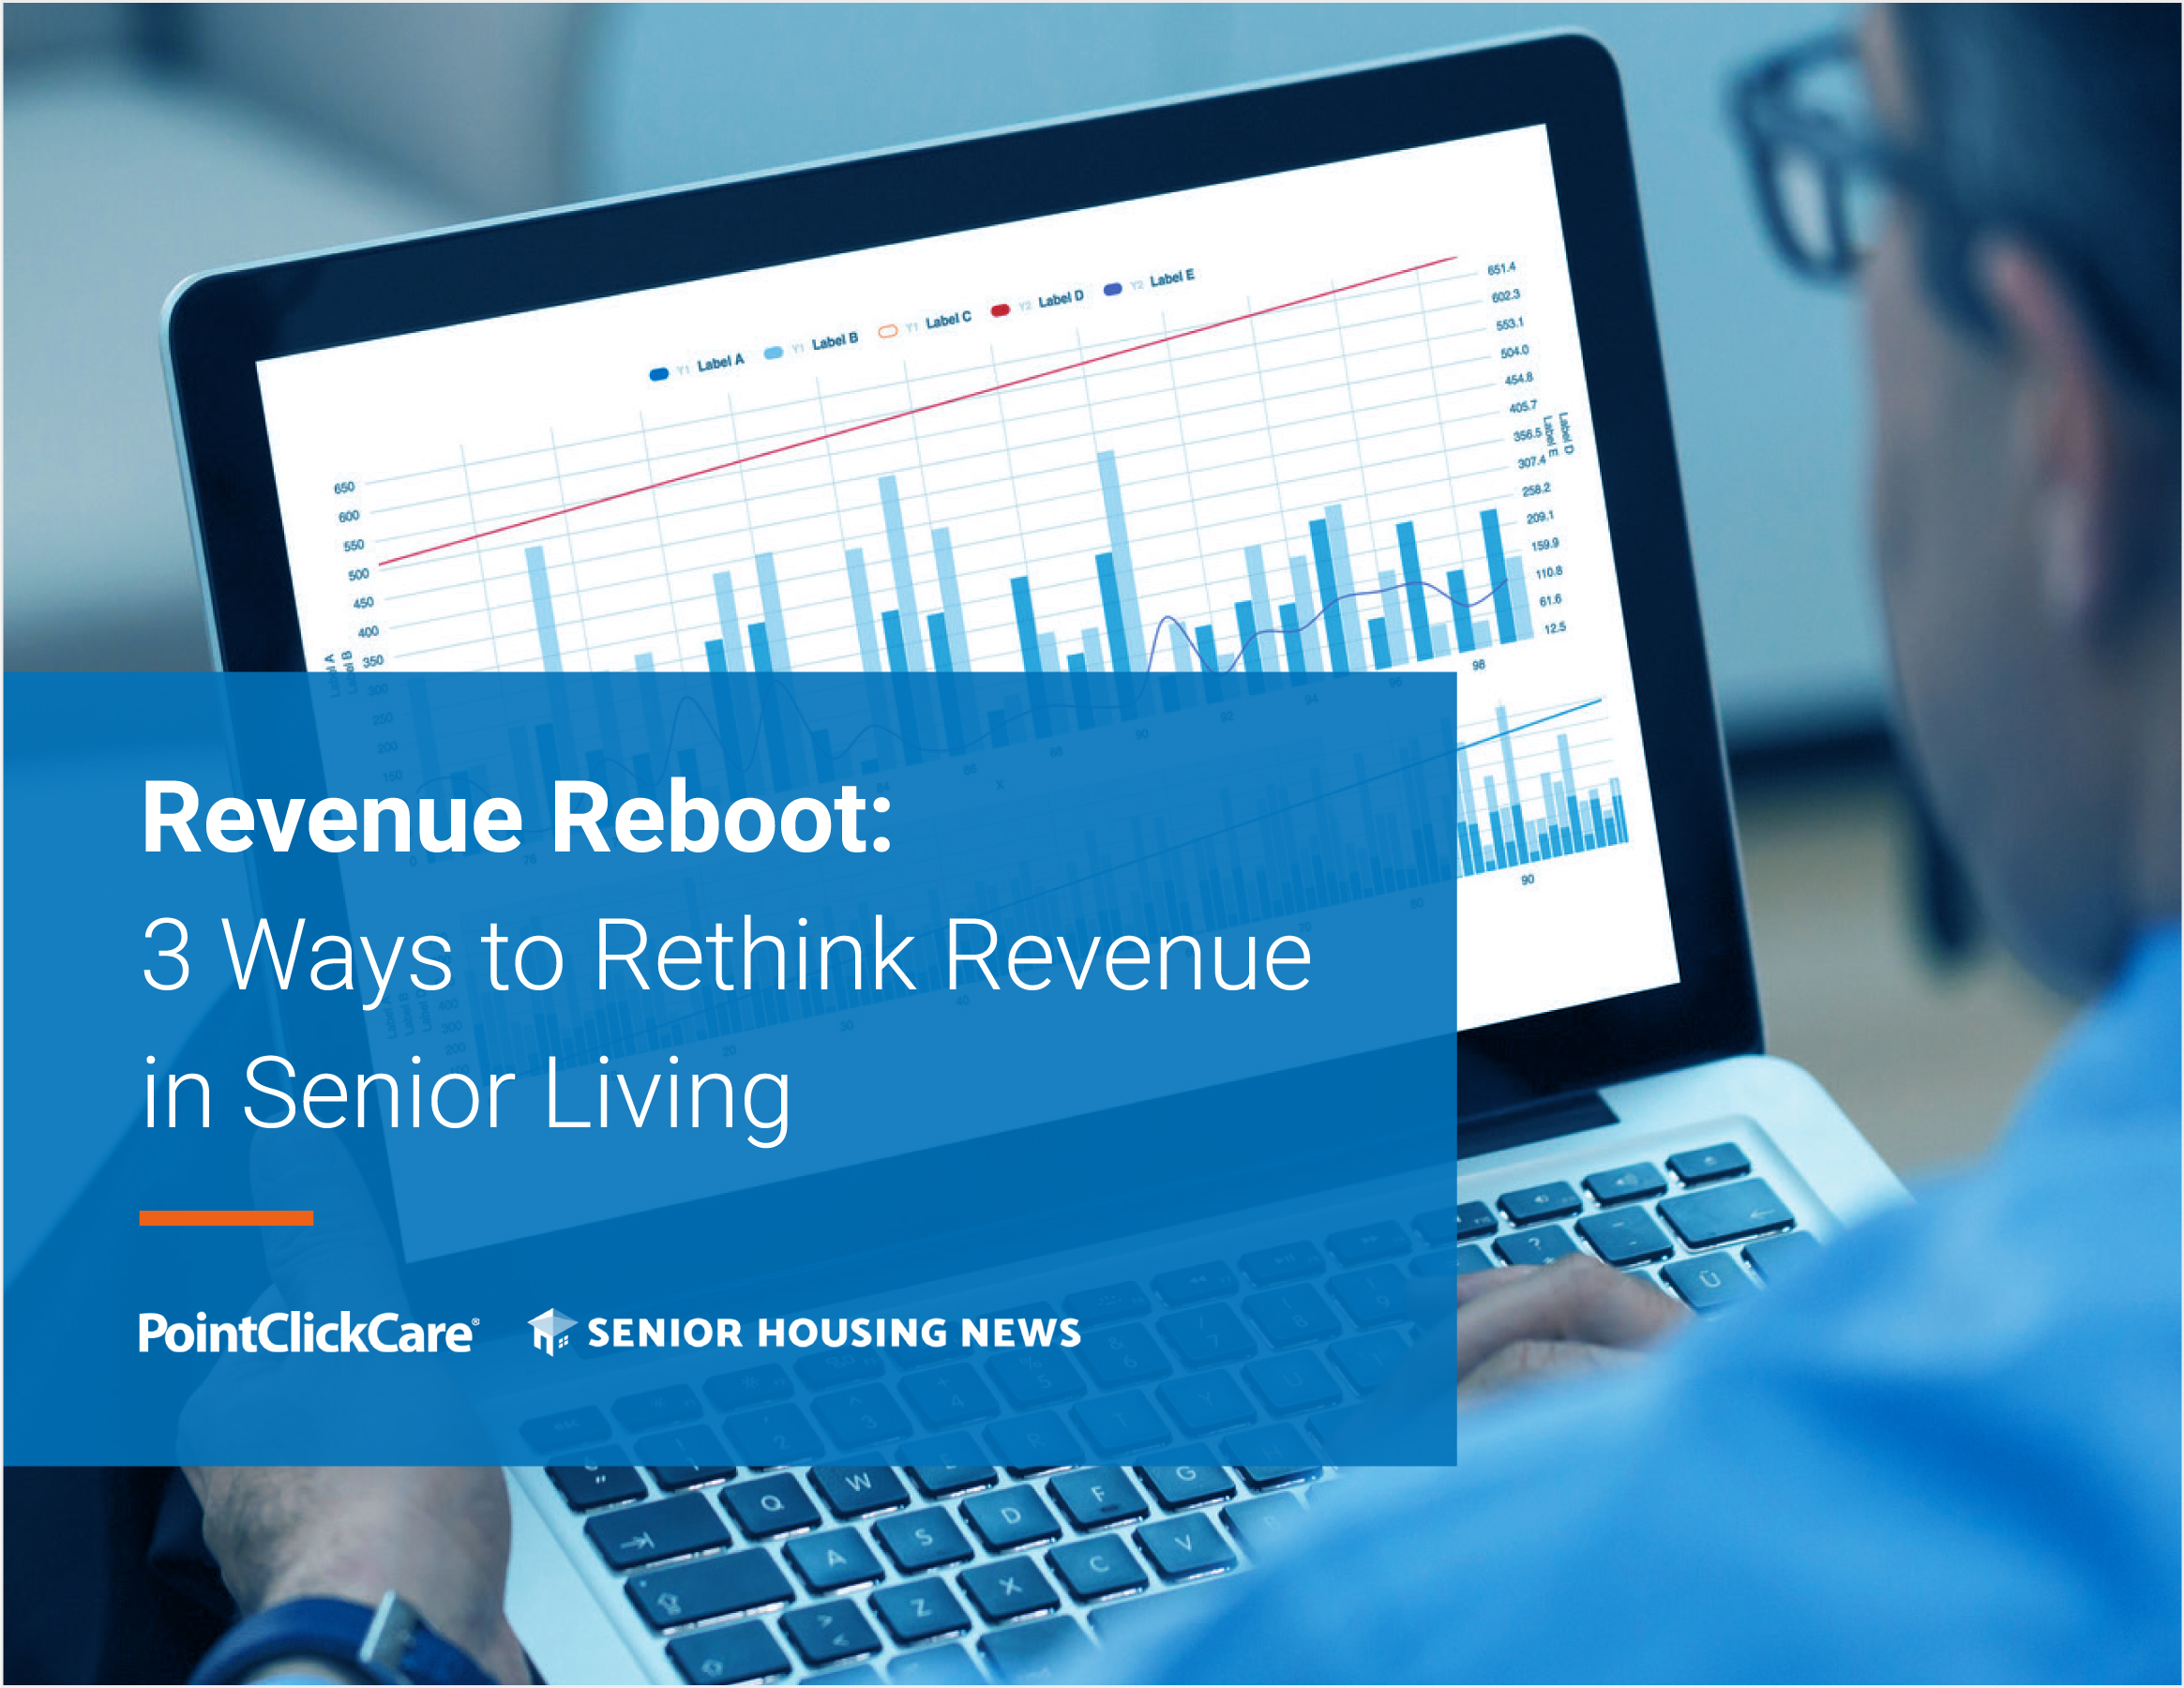 pointclickcare-revenue-reboot-3-ways-to-rethink-revenue-in-senior-livingl-cover-pg